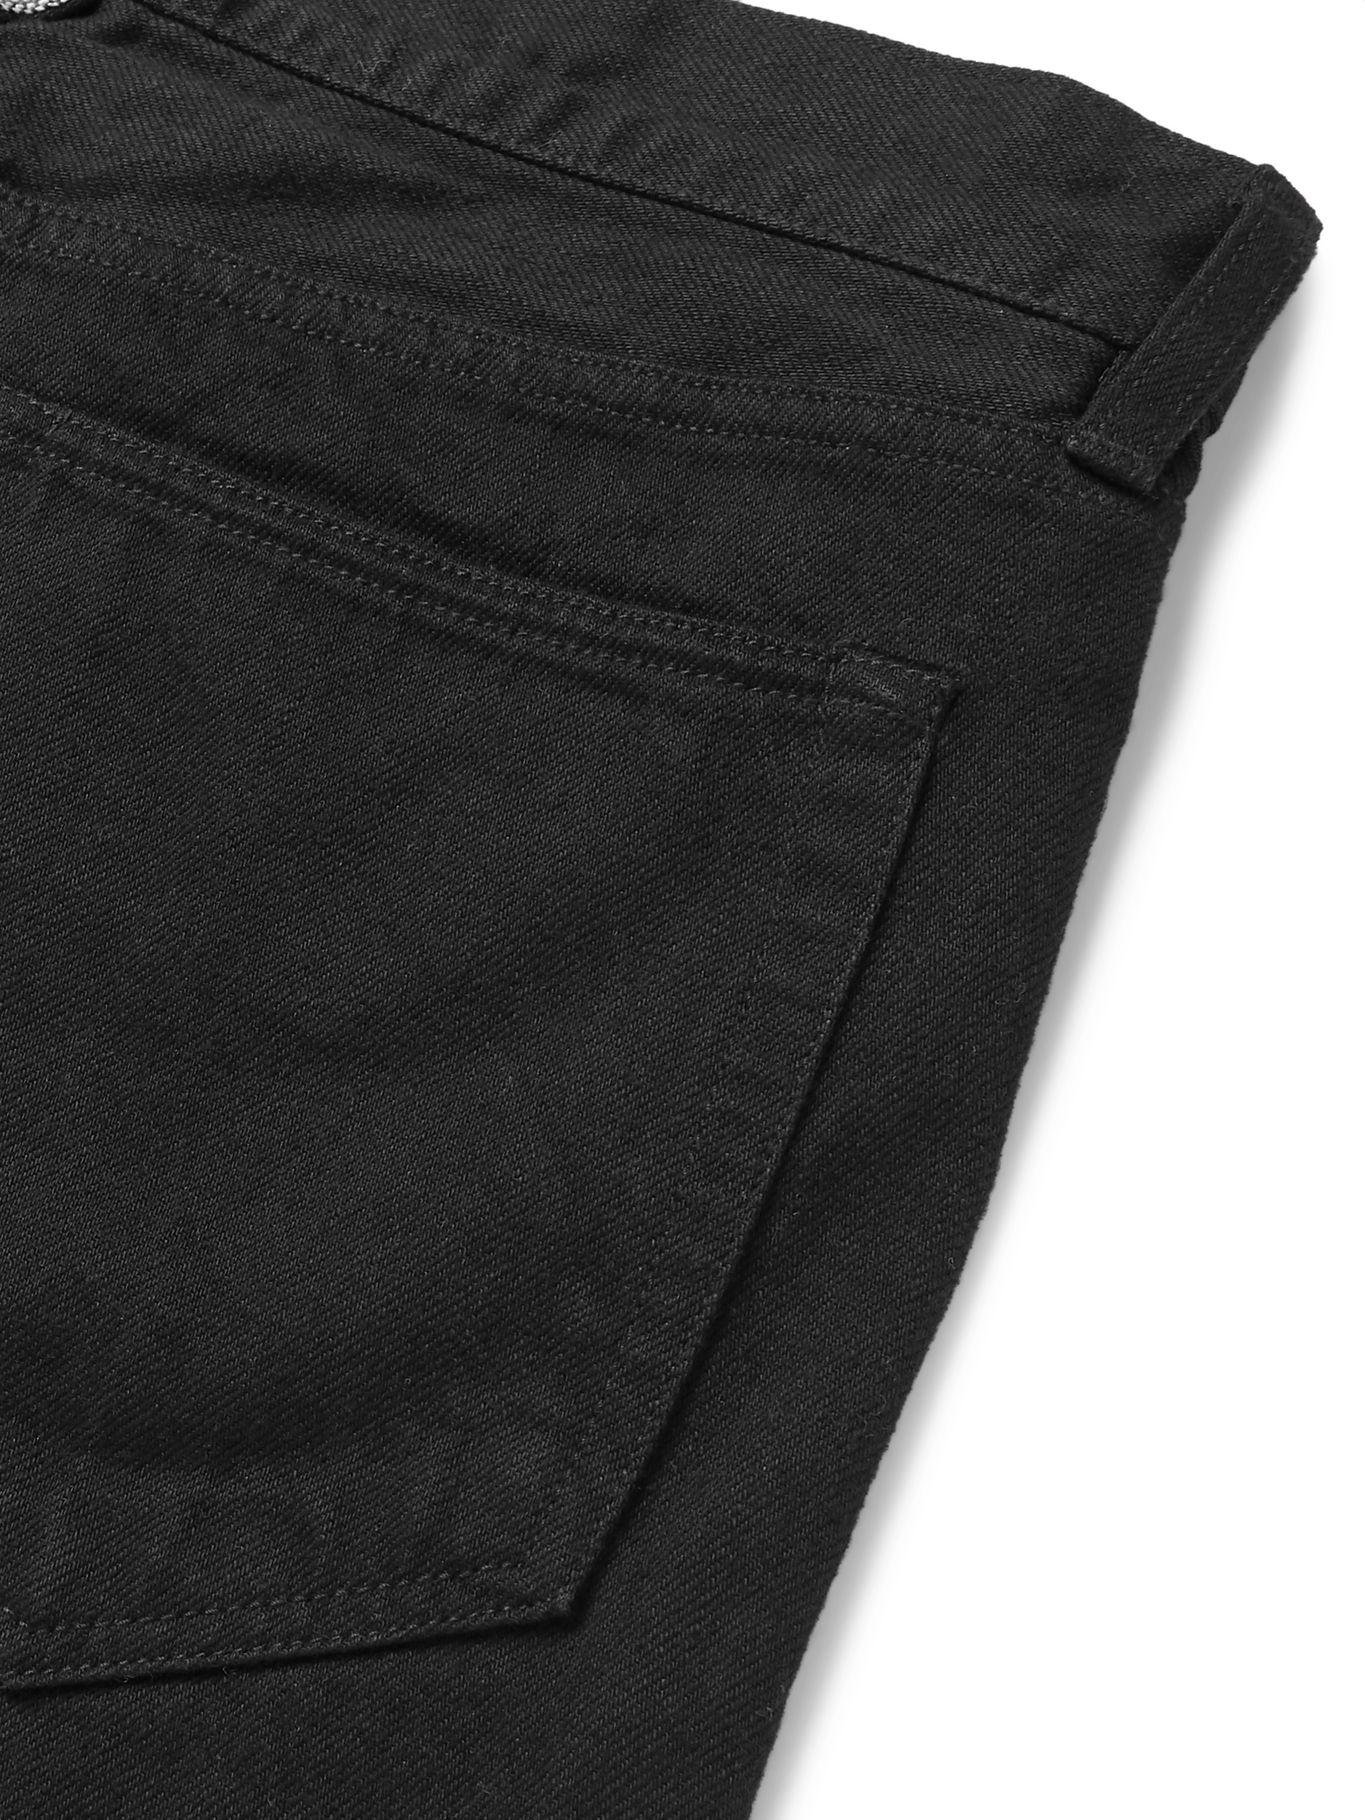 Black Slim-Fit Selvedge Denim Jeans | MR P. | MR PORTER